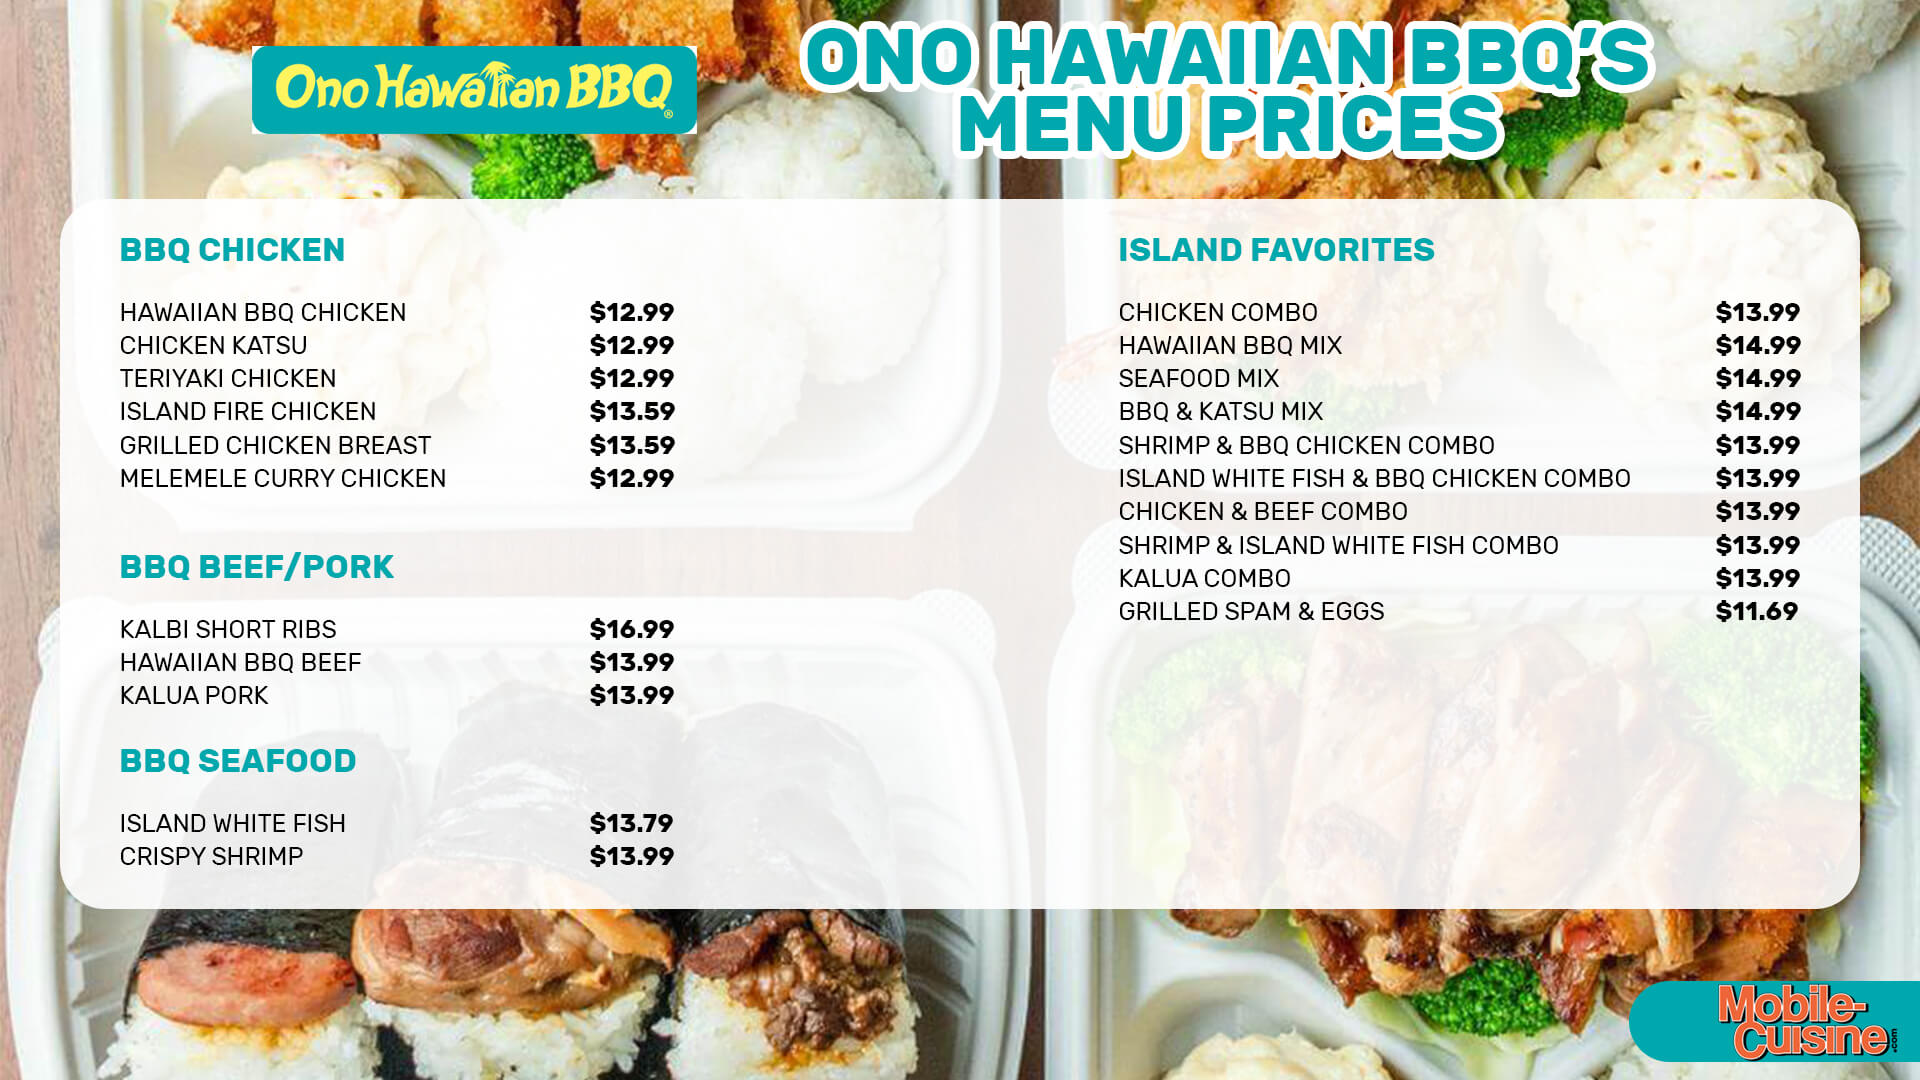 Ono Hawaiian BBQ Menu Prices 